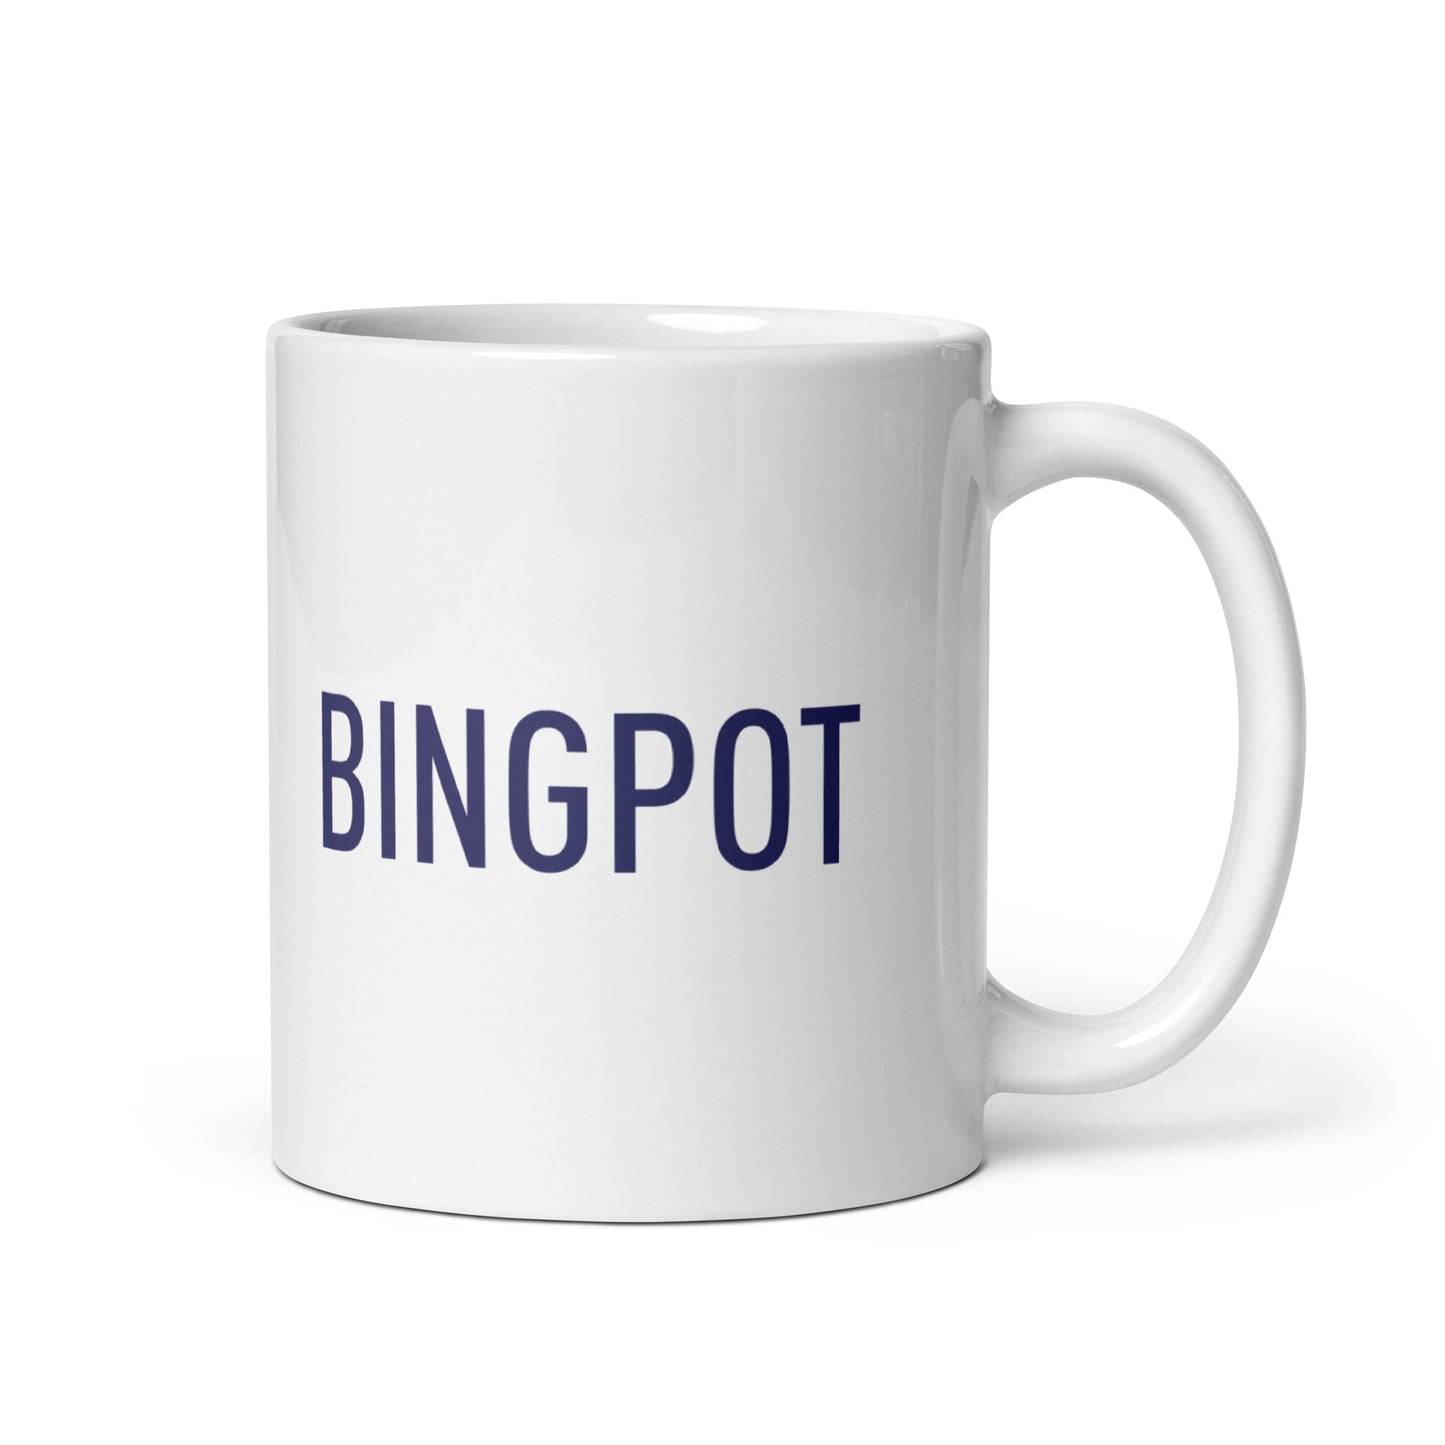 Bingpot White glossy mug